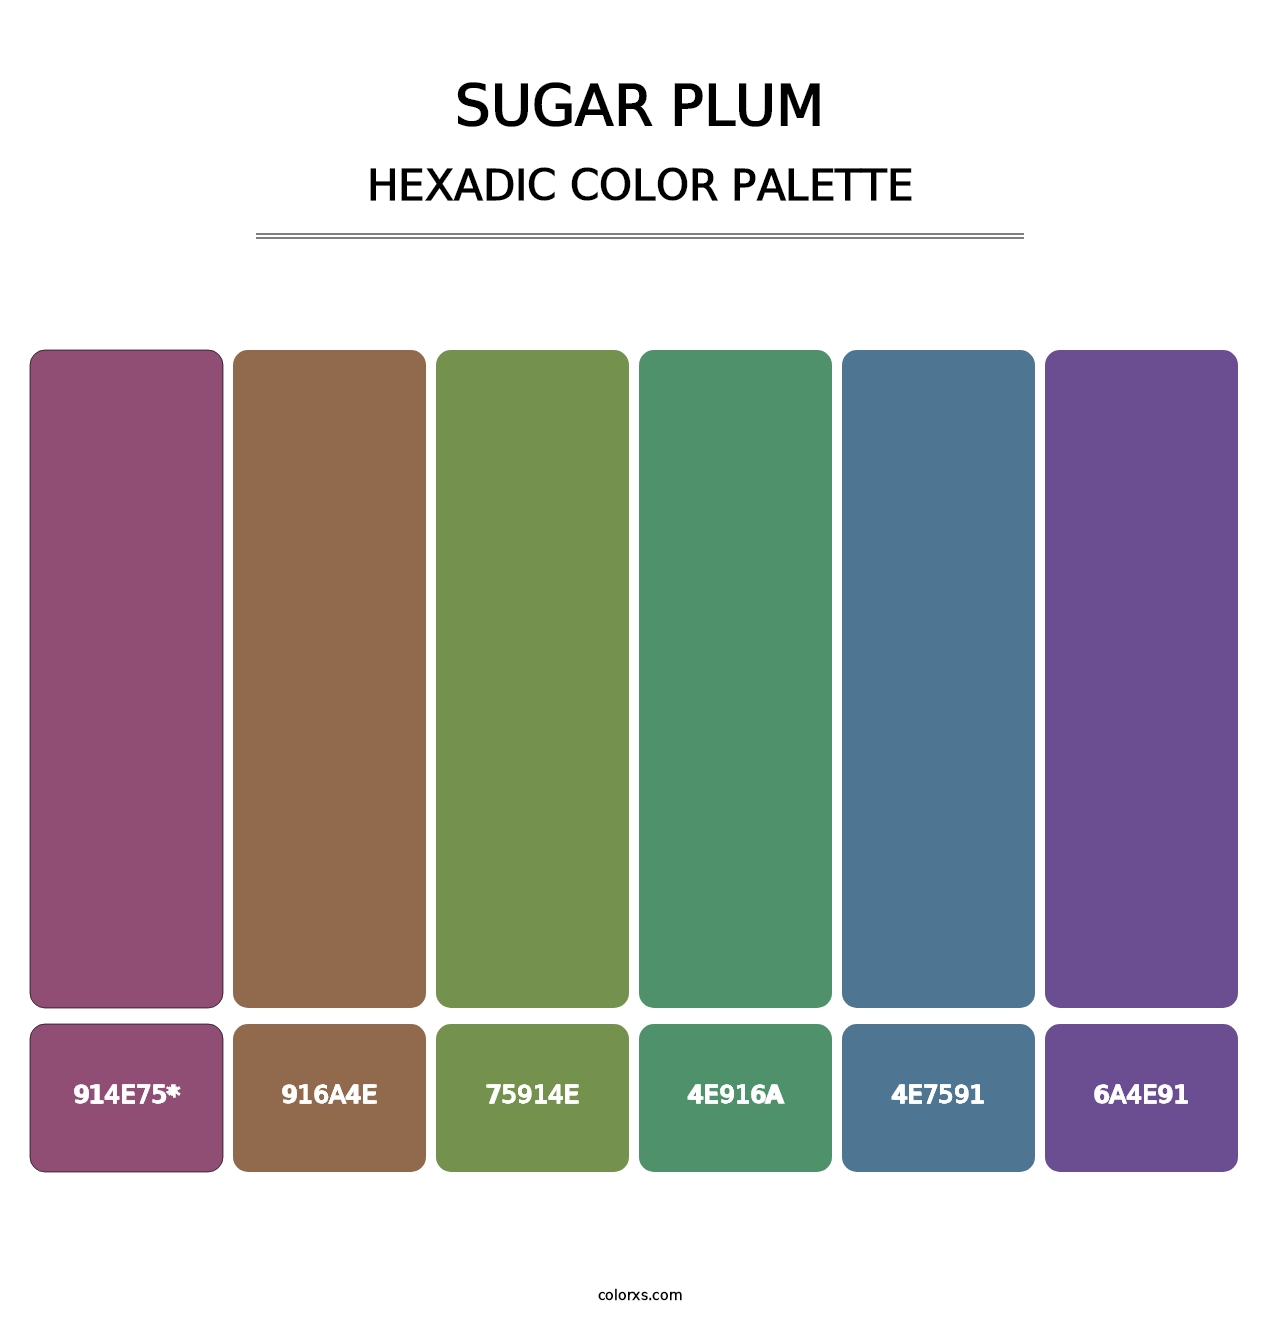 Sugar Plum - Hexadic Color Palette